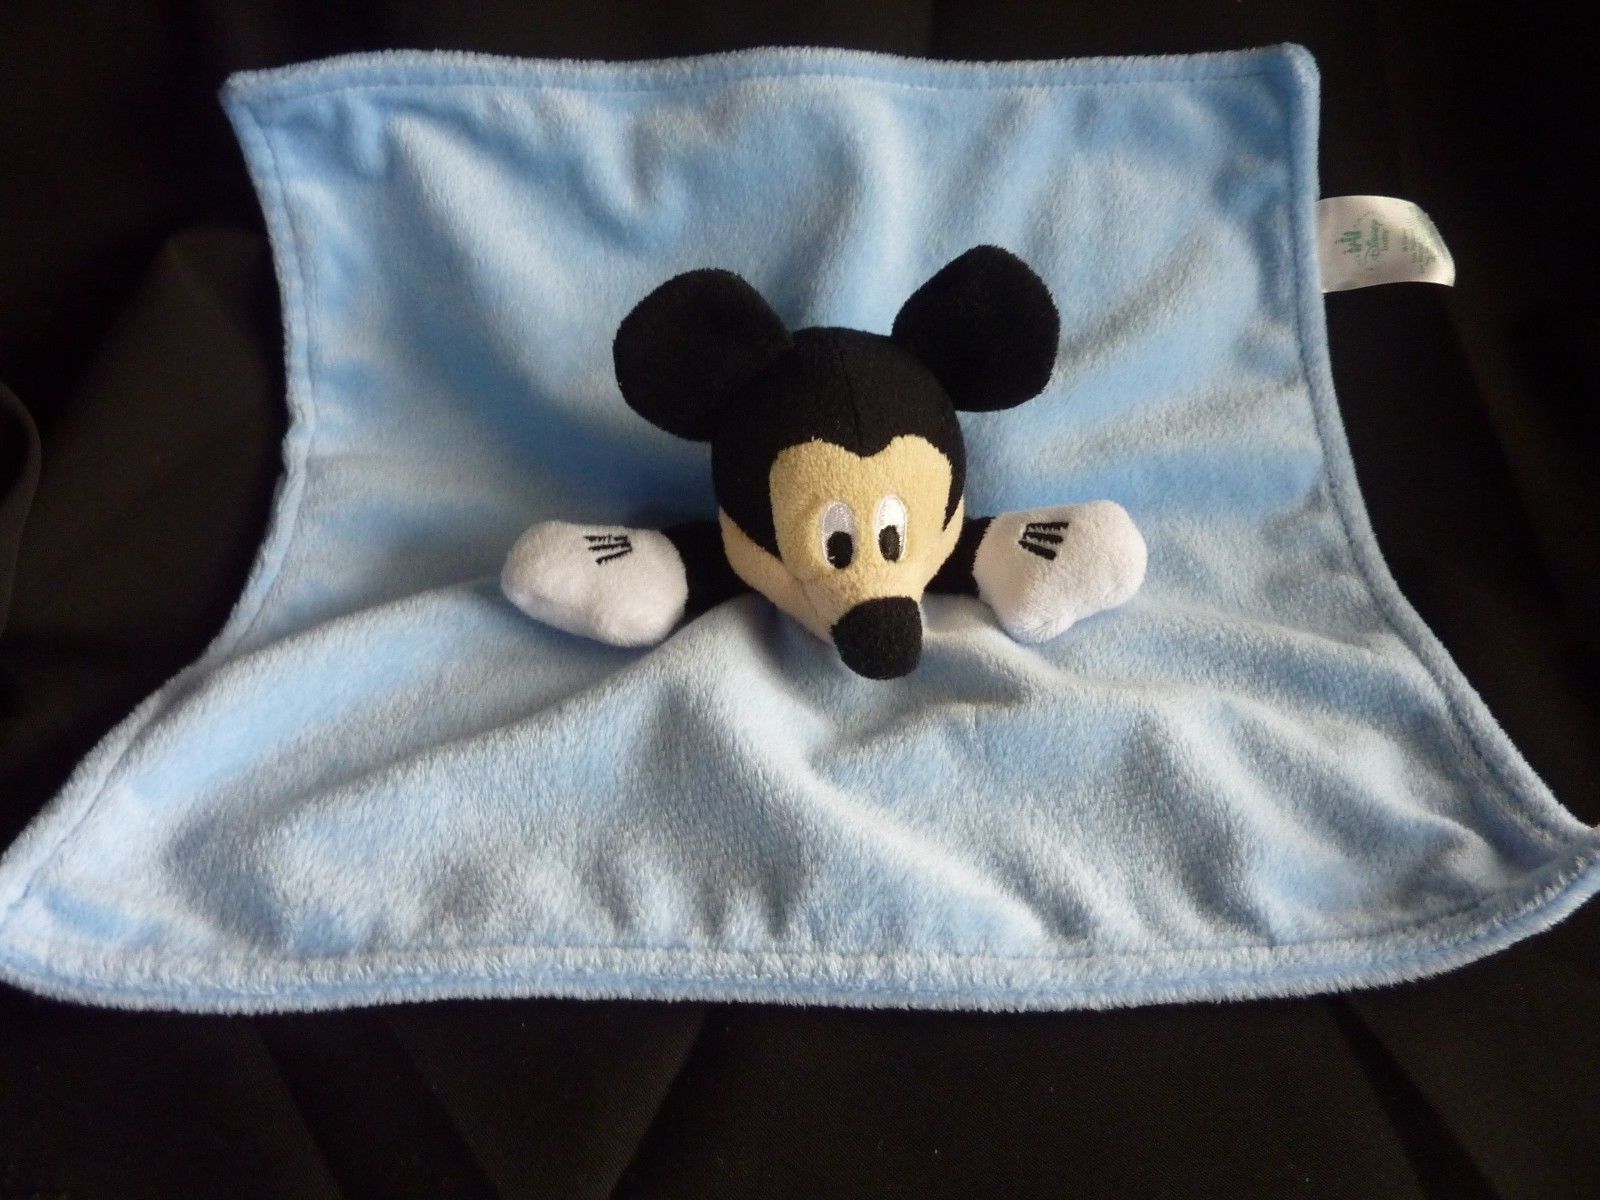 Disney Baby Mickey Mouse Plush Stuffed Animal Snuggler Blanket Red 